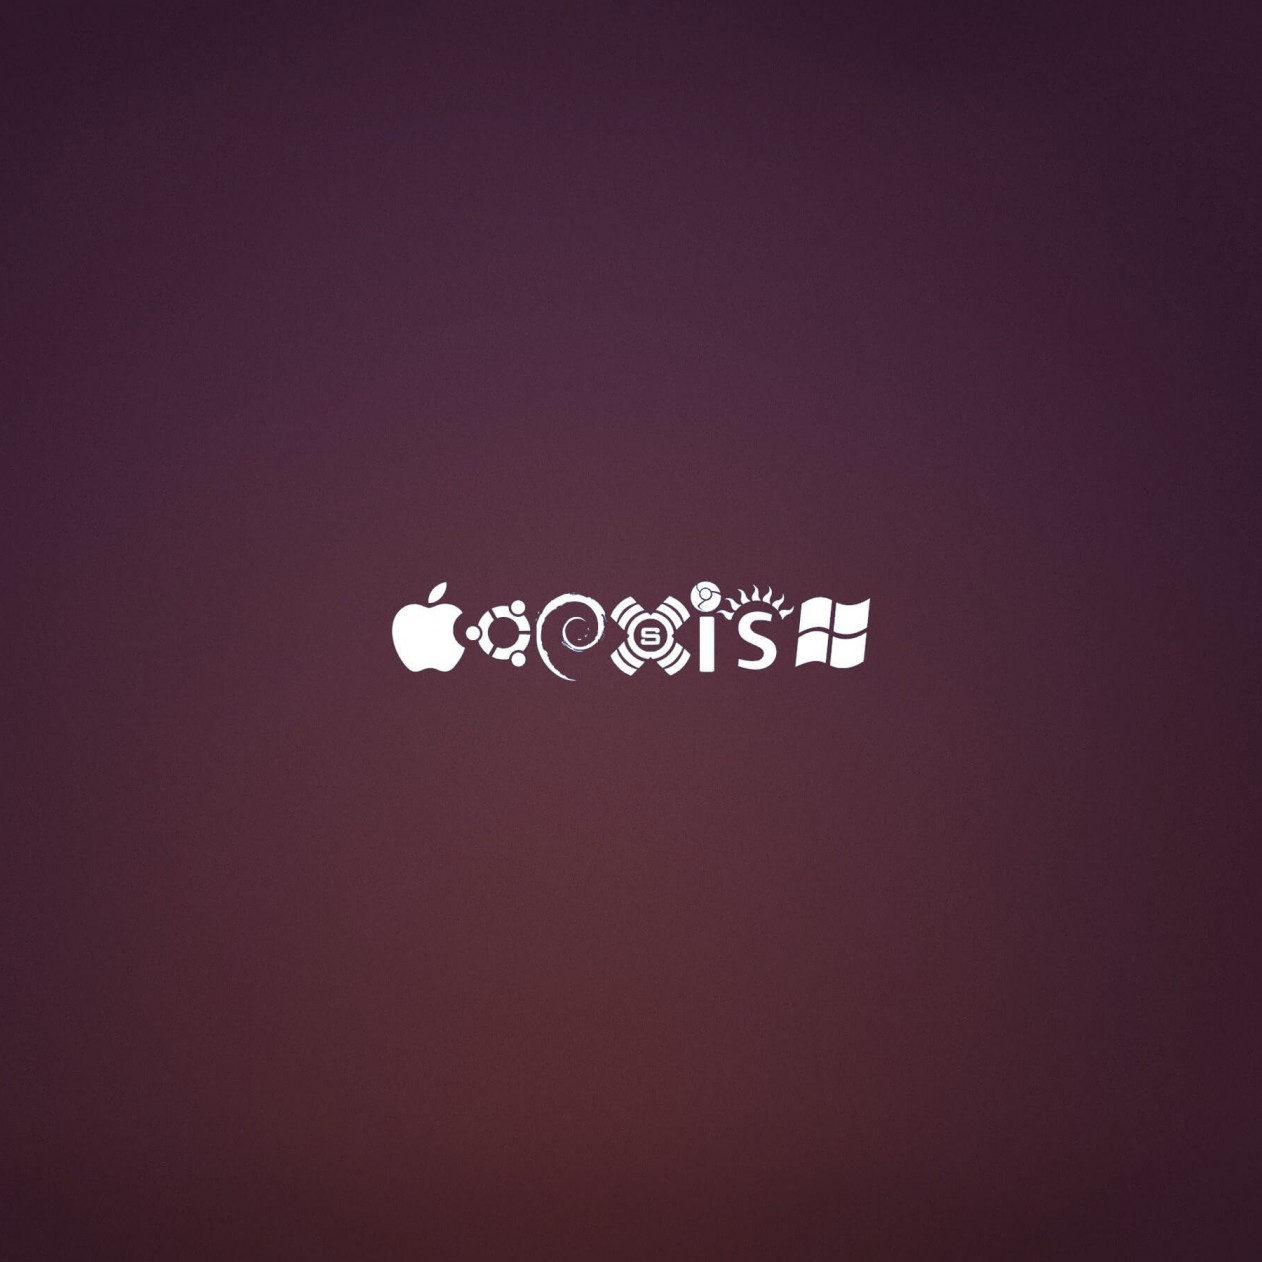 OS Coexist Wallpaper for Apple iPad mini